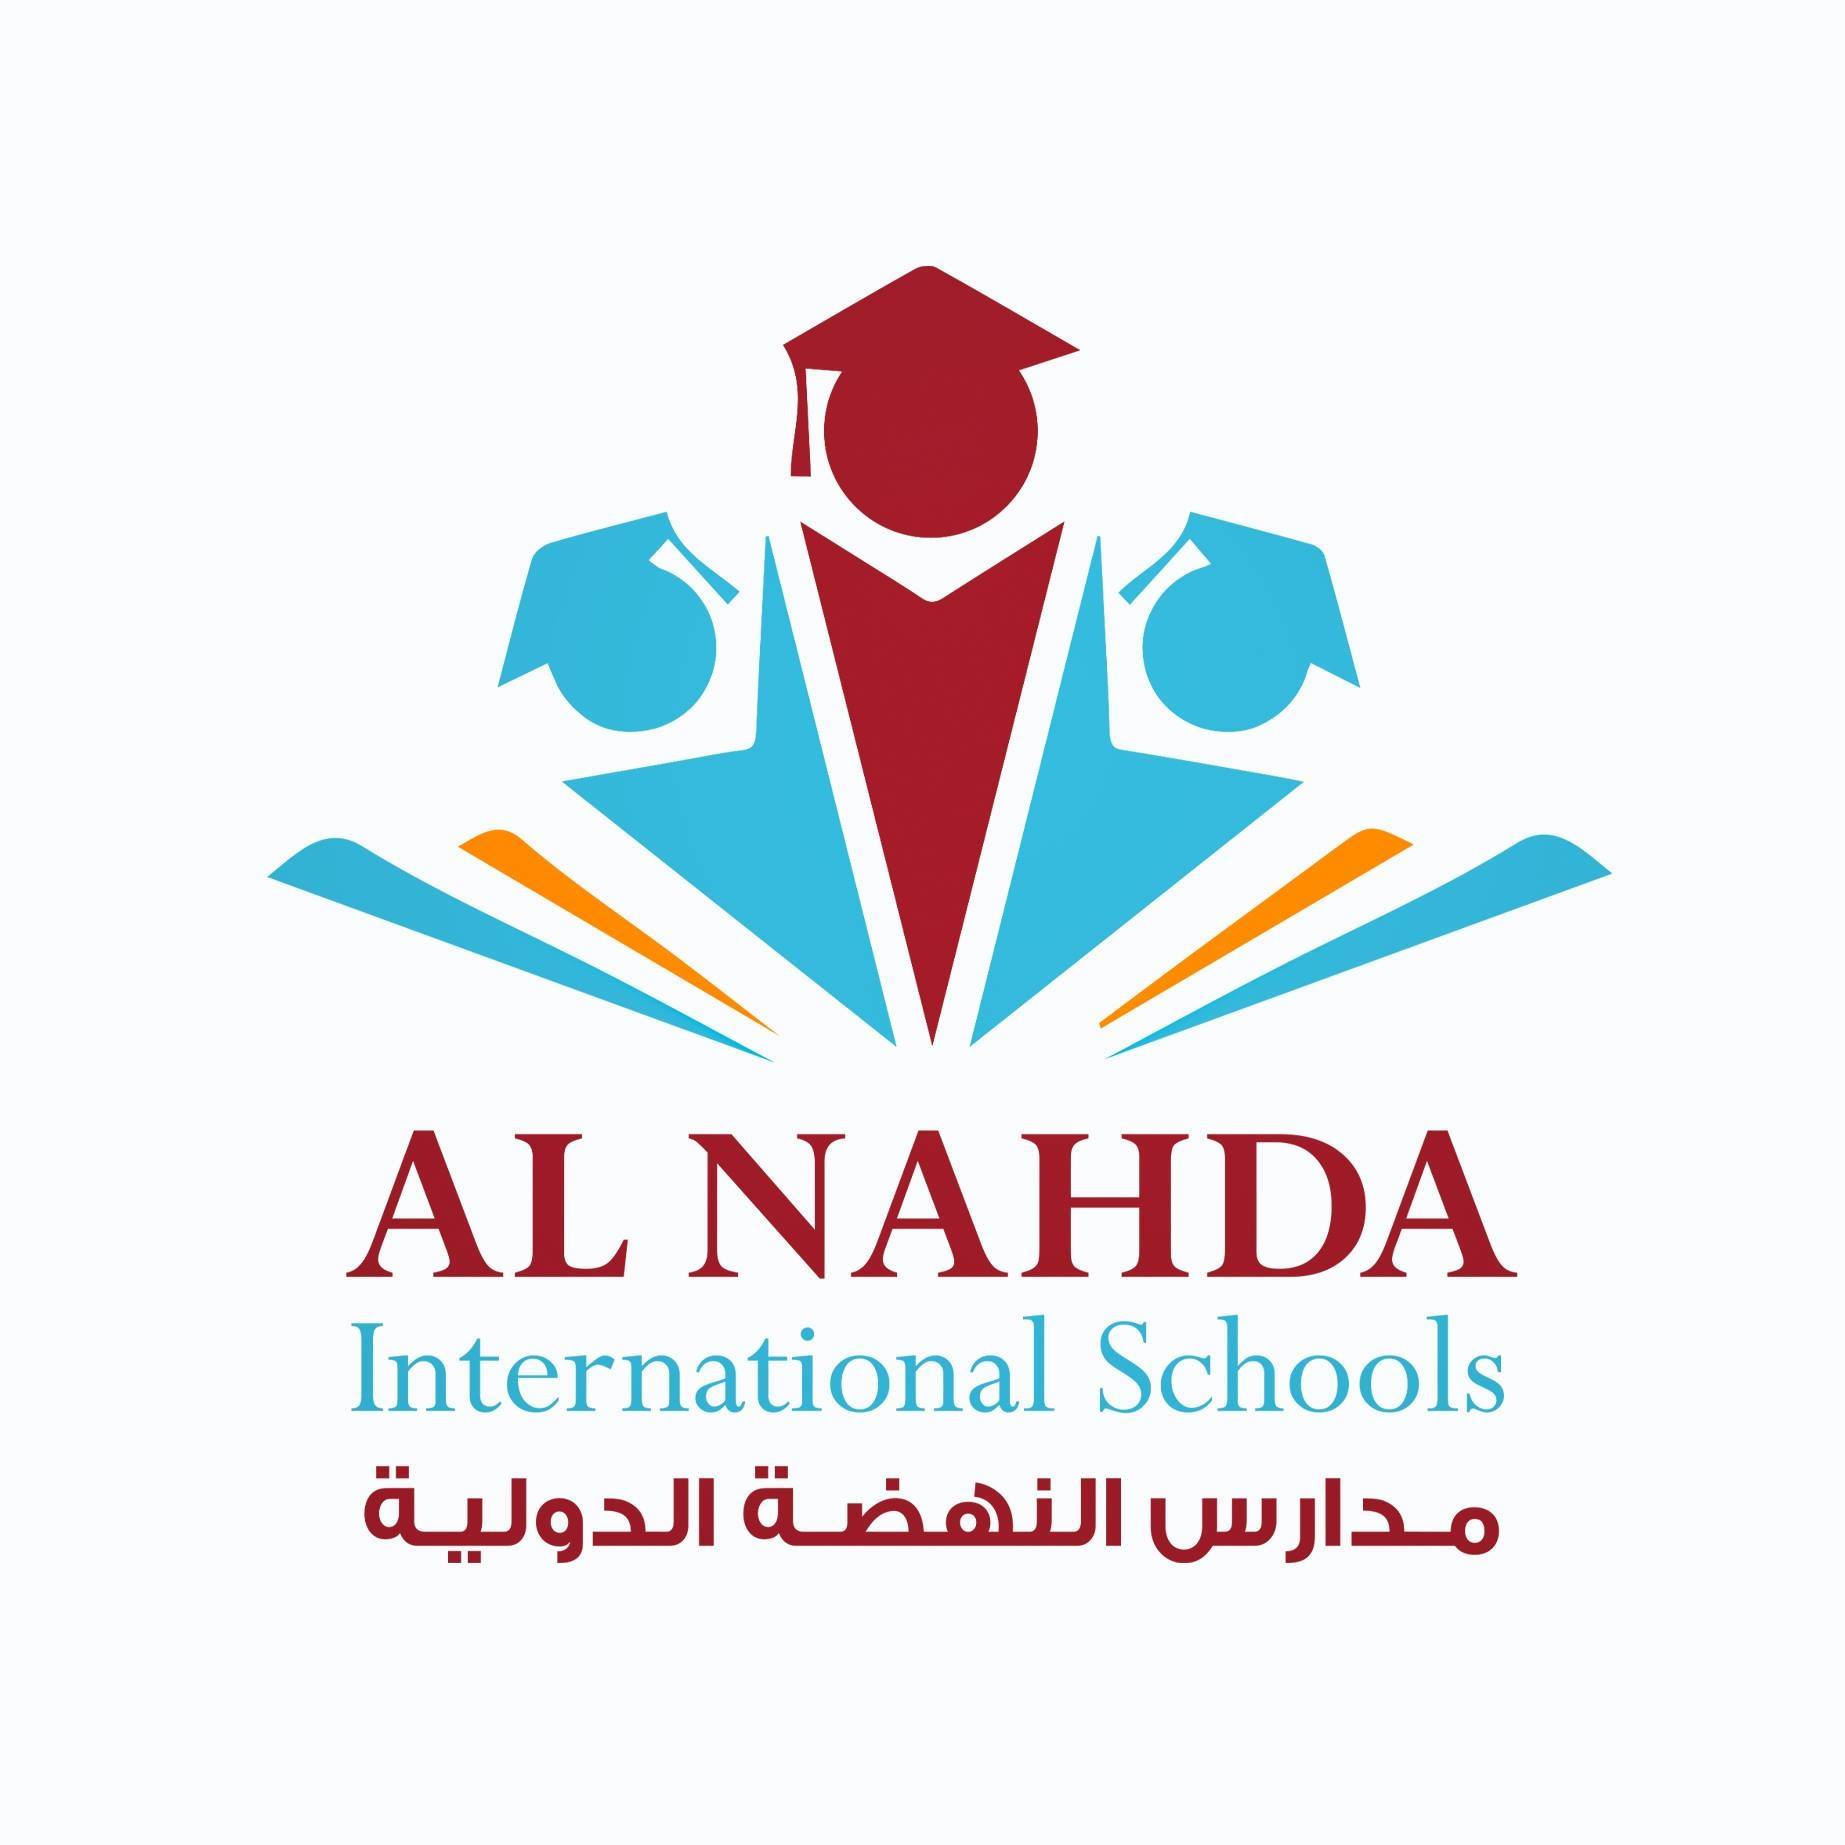 Al Nahda International Schools